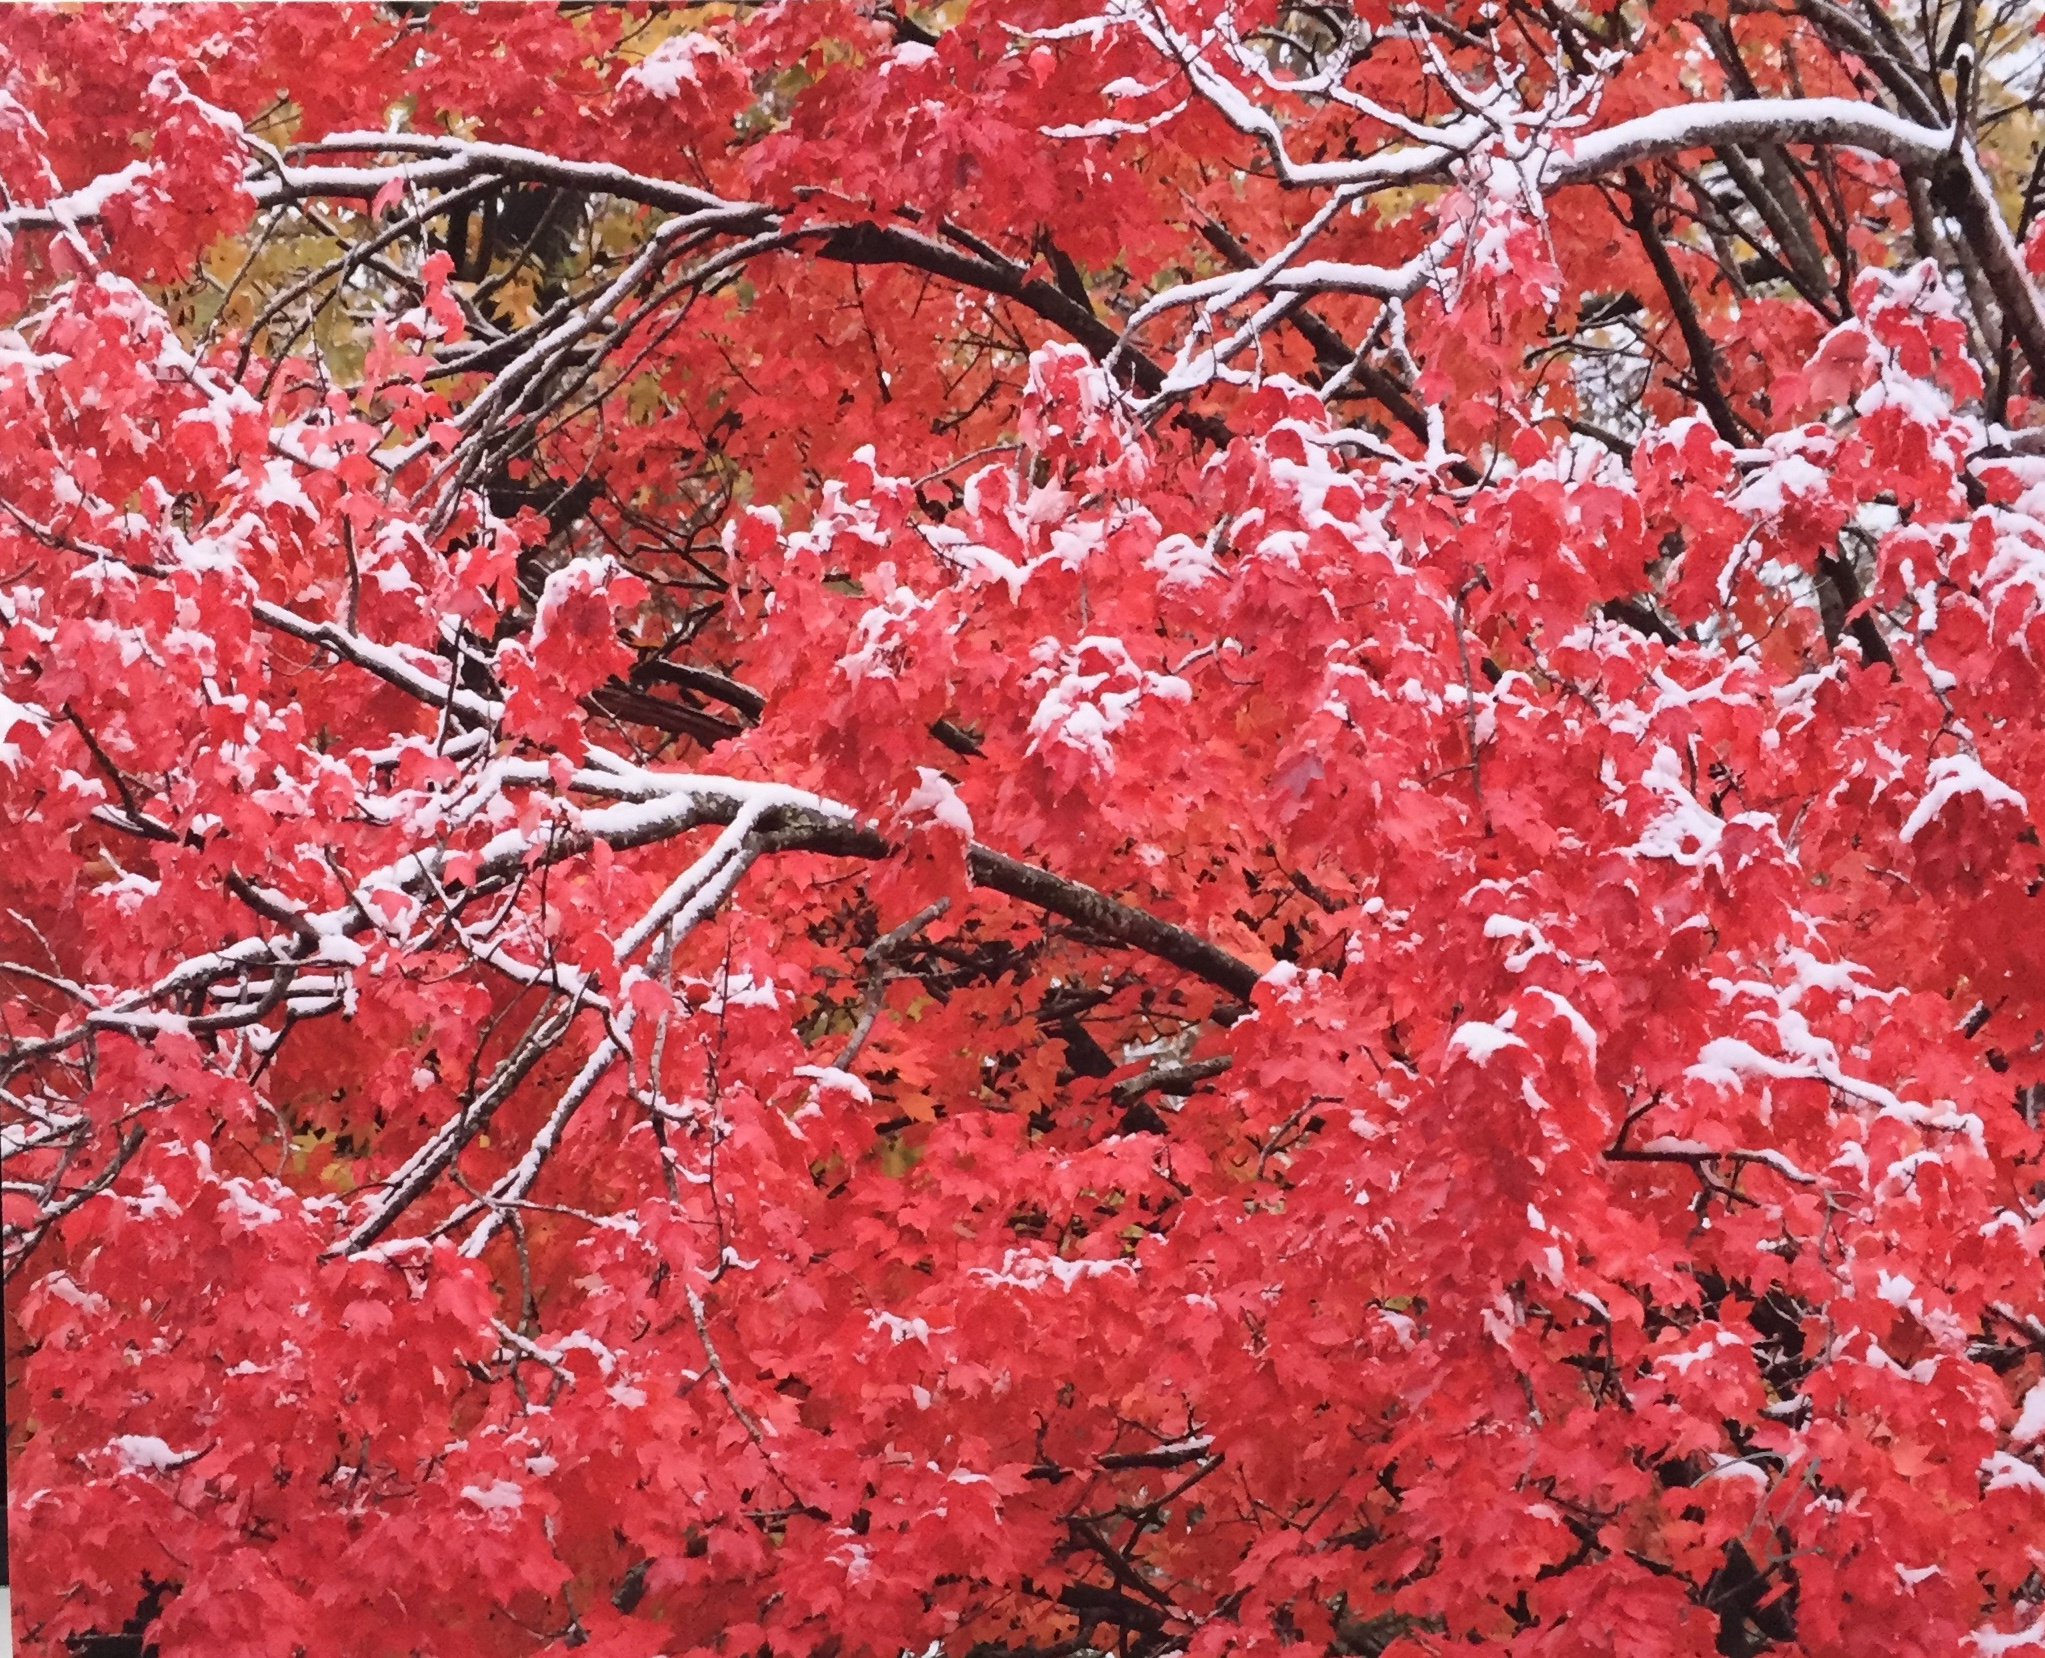 Maple Tree, Autumn Snow
Photography
8" X 10"
$25.